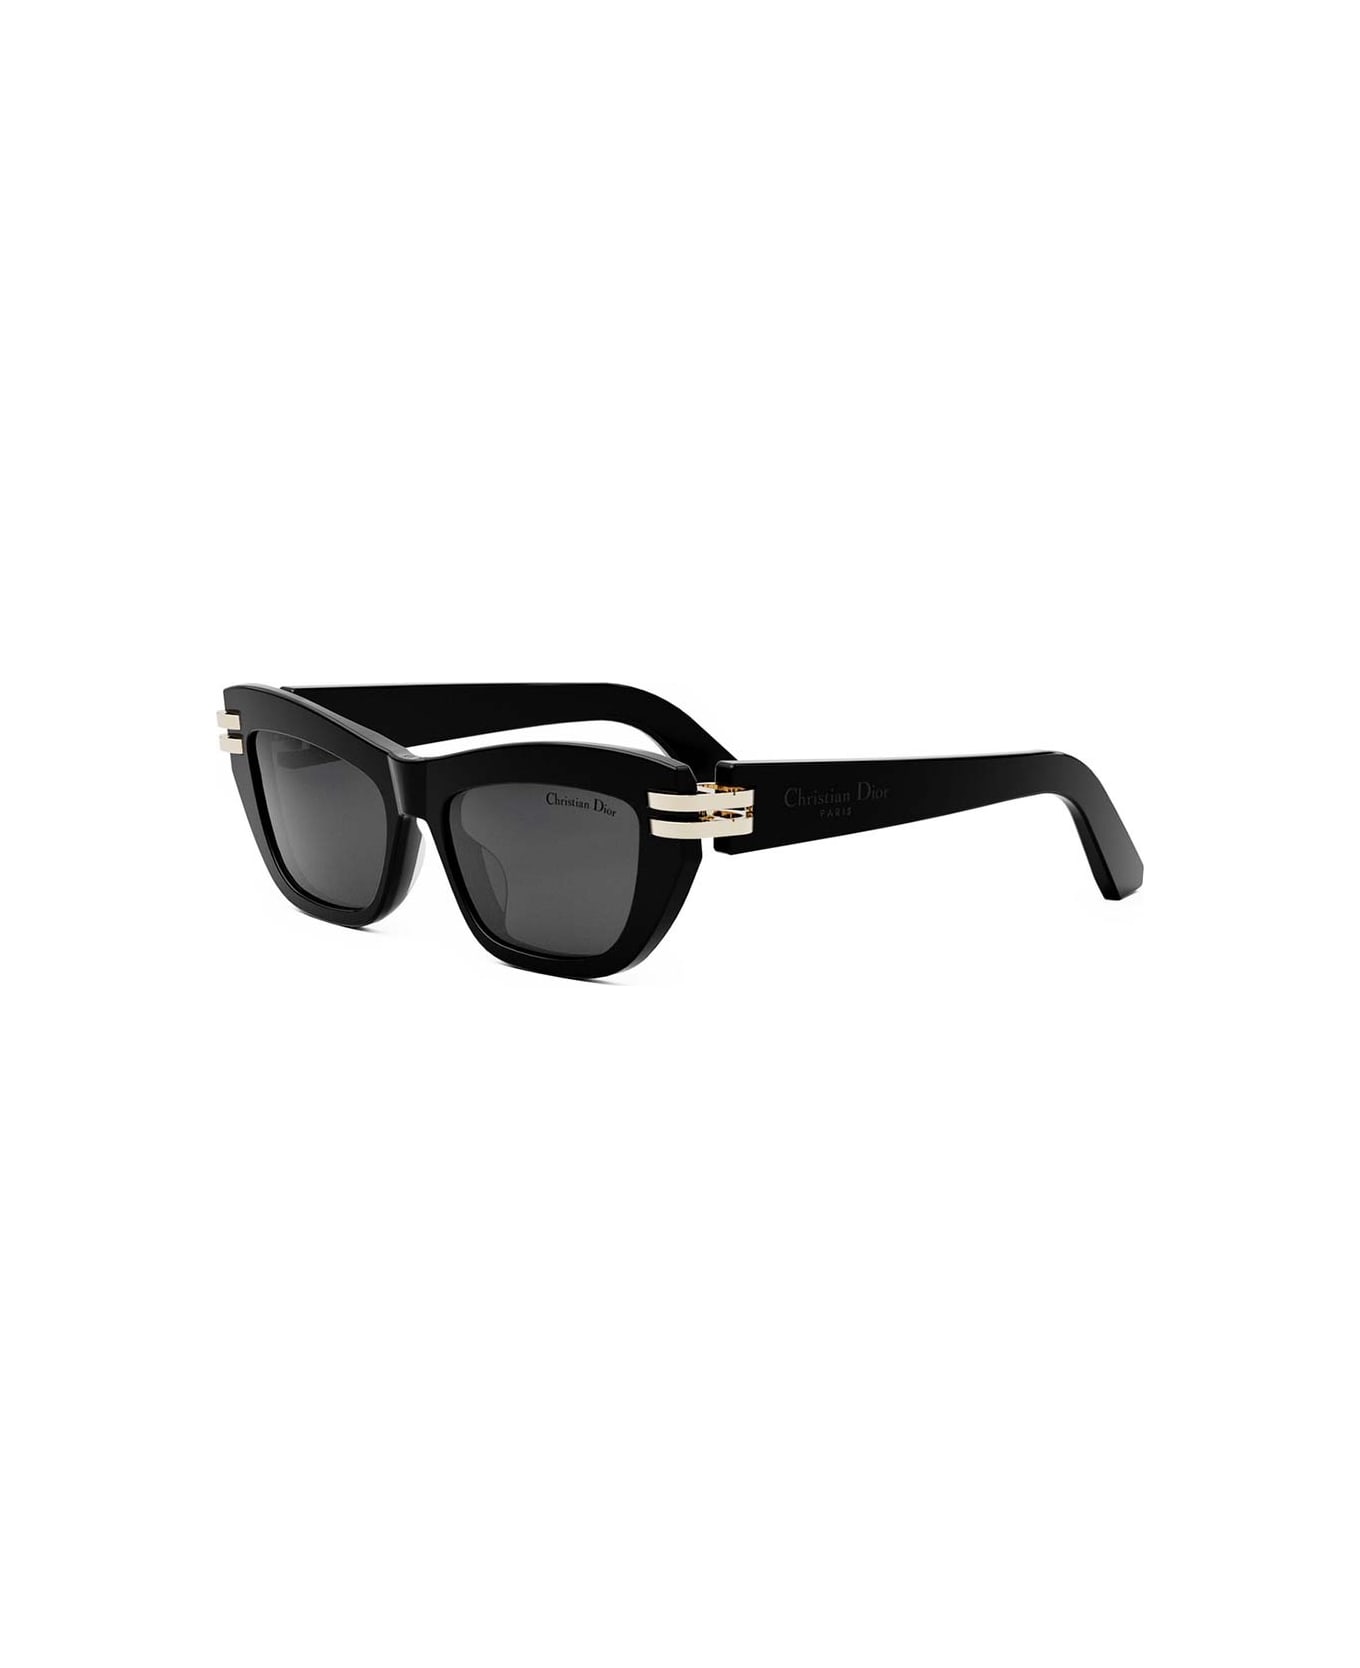 Dior Eyewear Sunglasses - Nero/Grigio